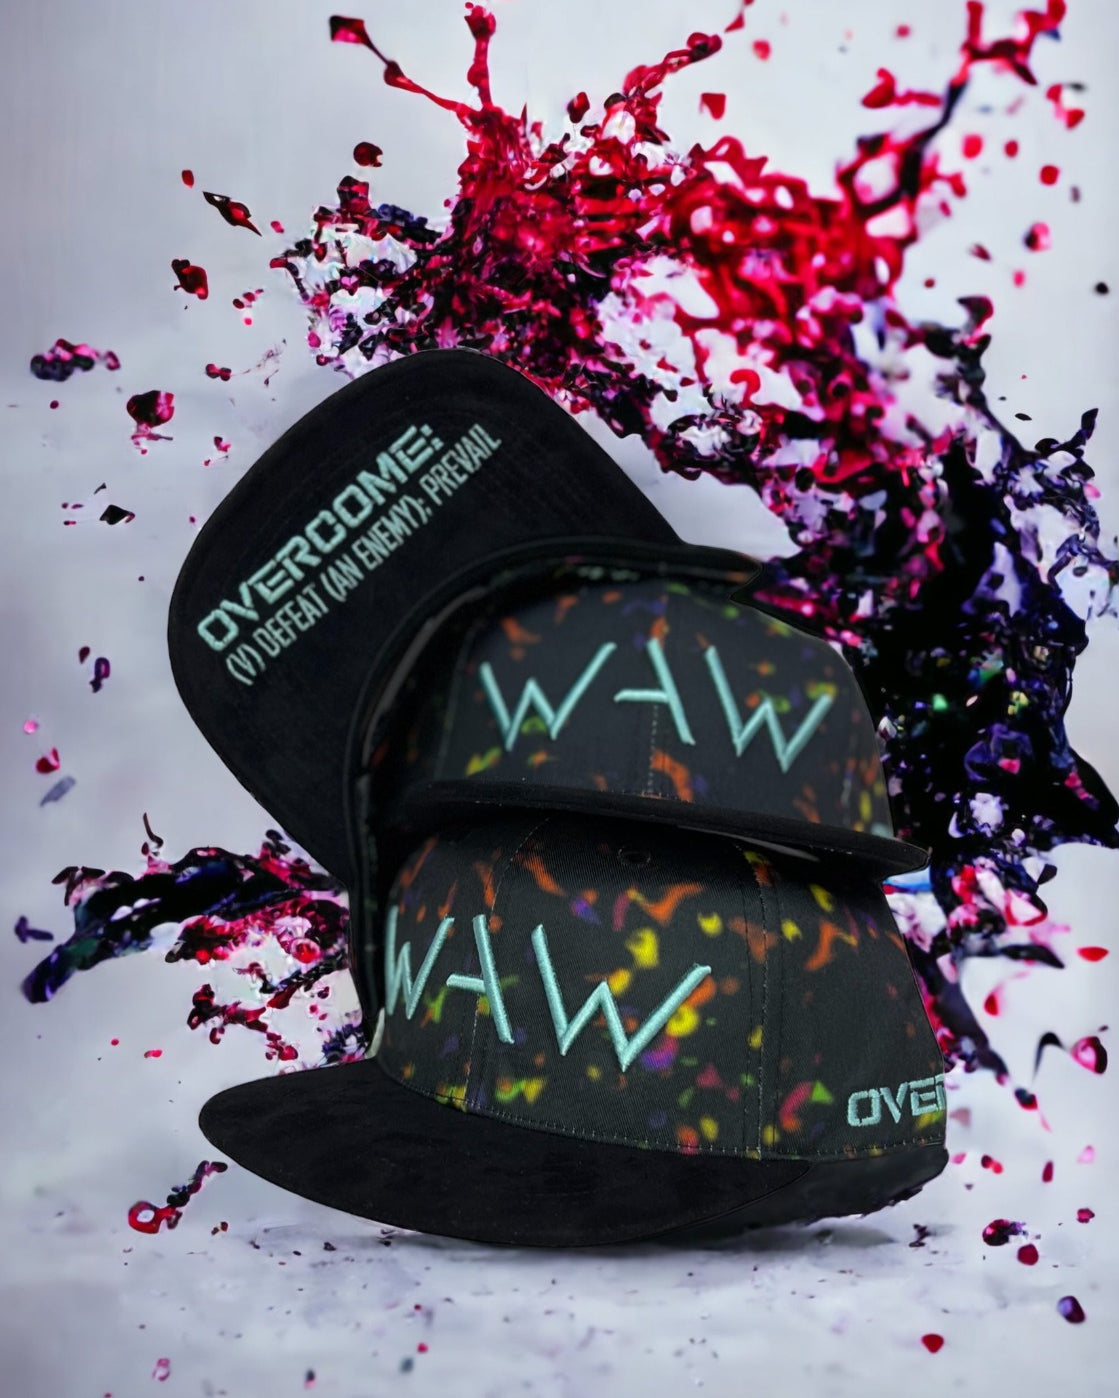 Color Splash Hat with WAW logo and Overcome message, WeAreWarriorsApparel.com